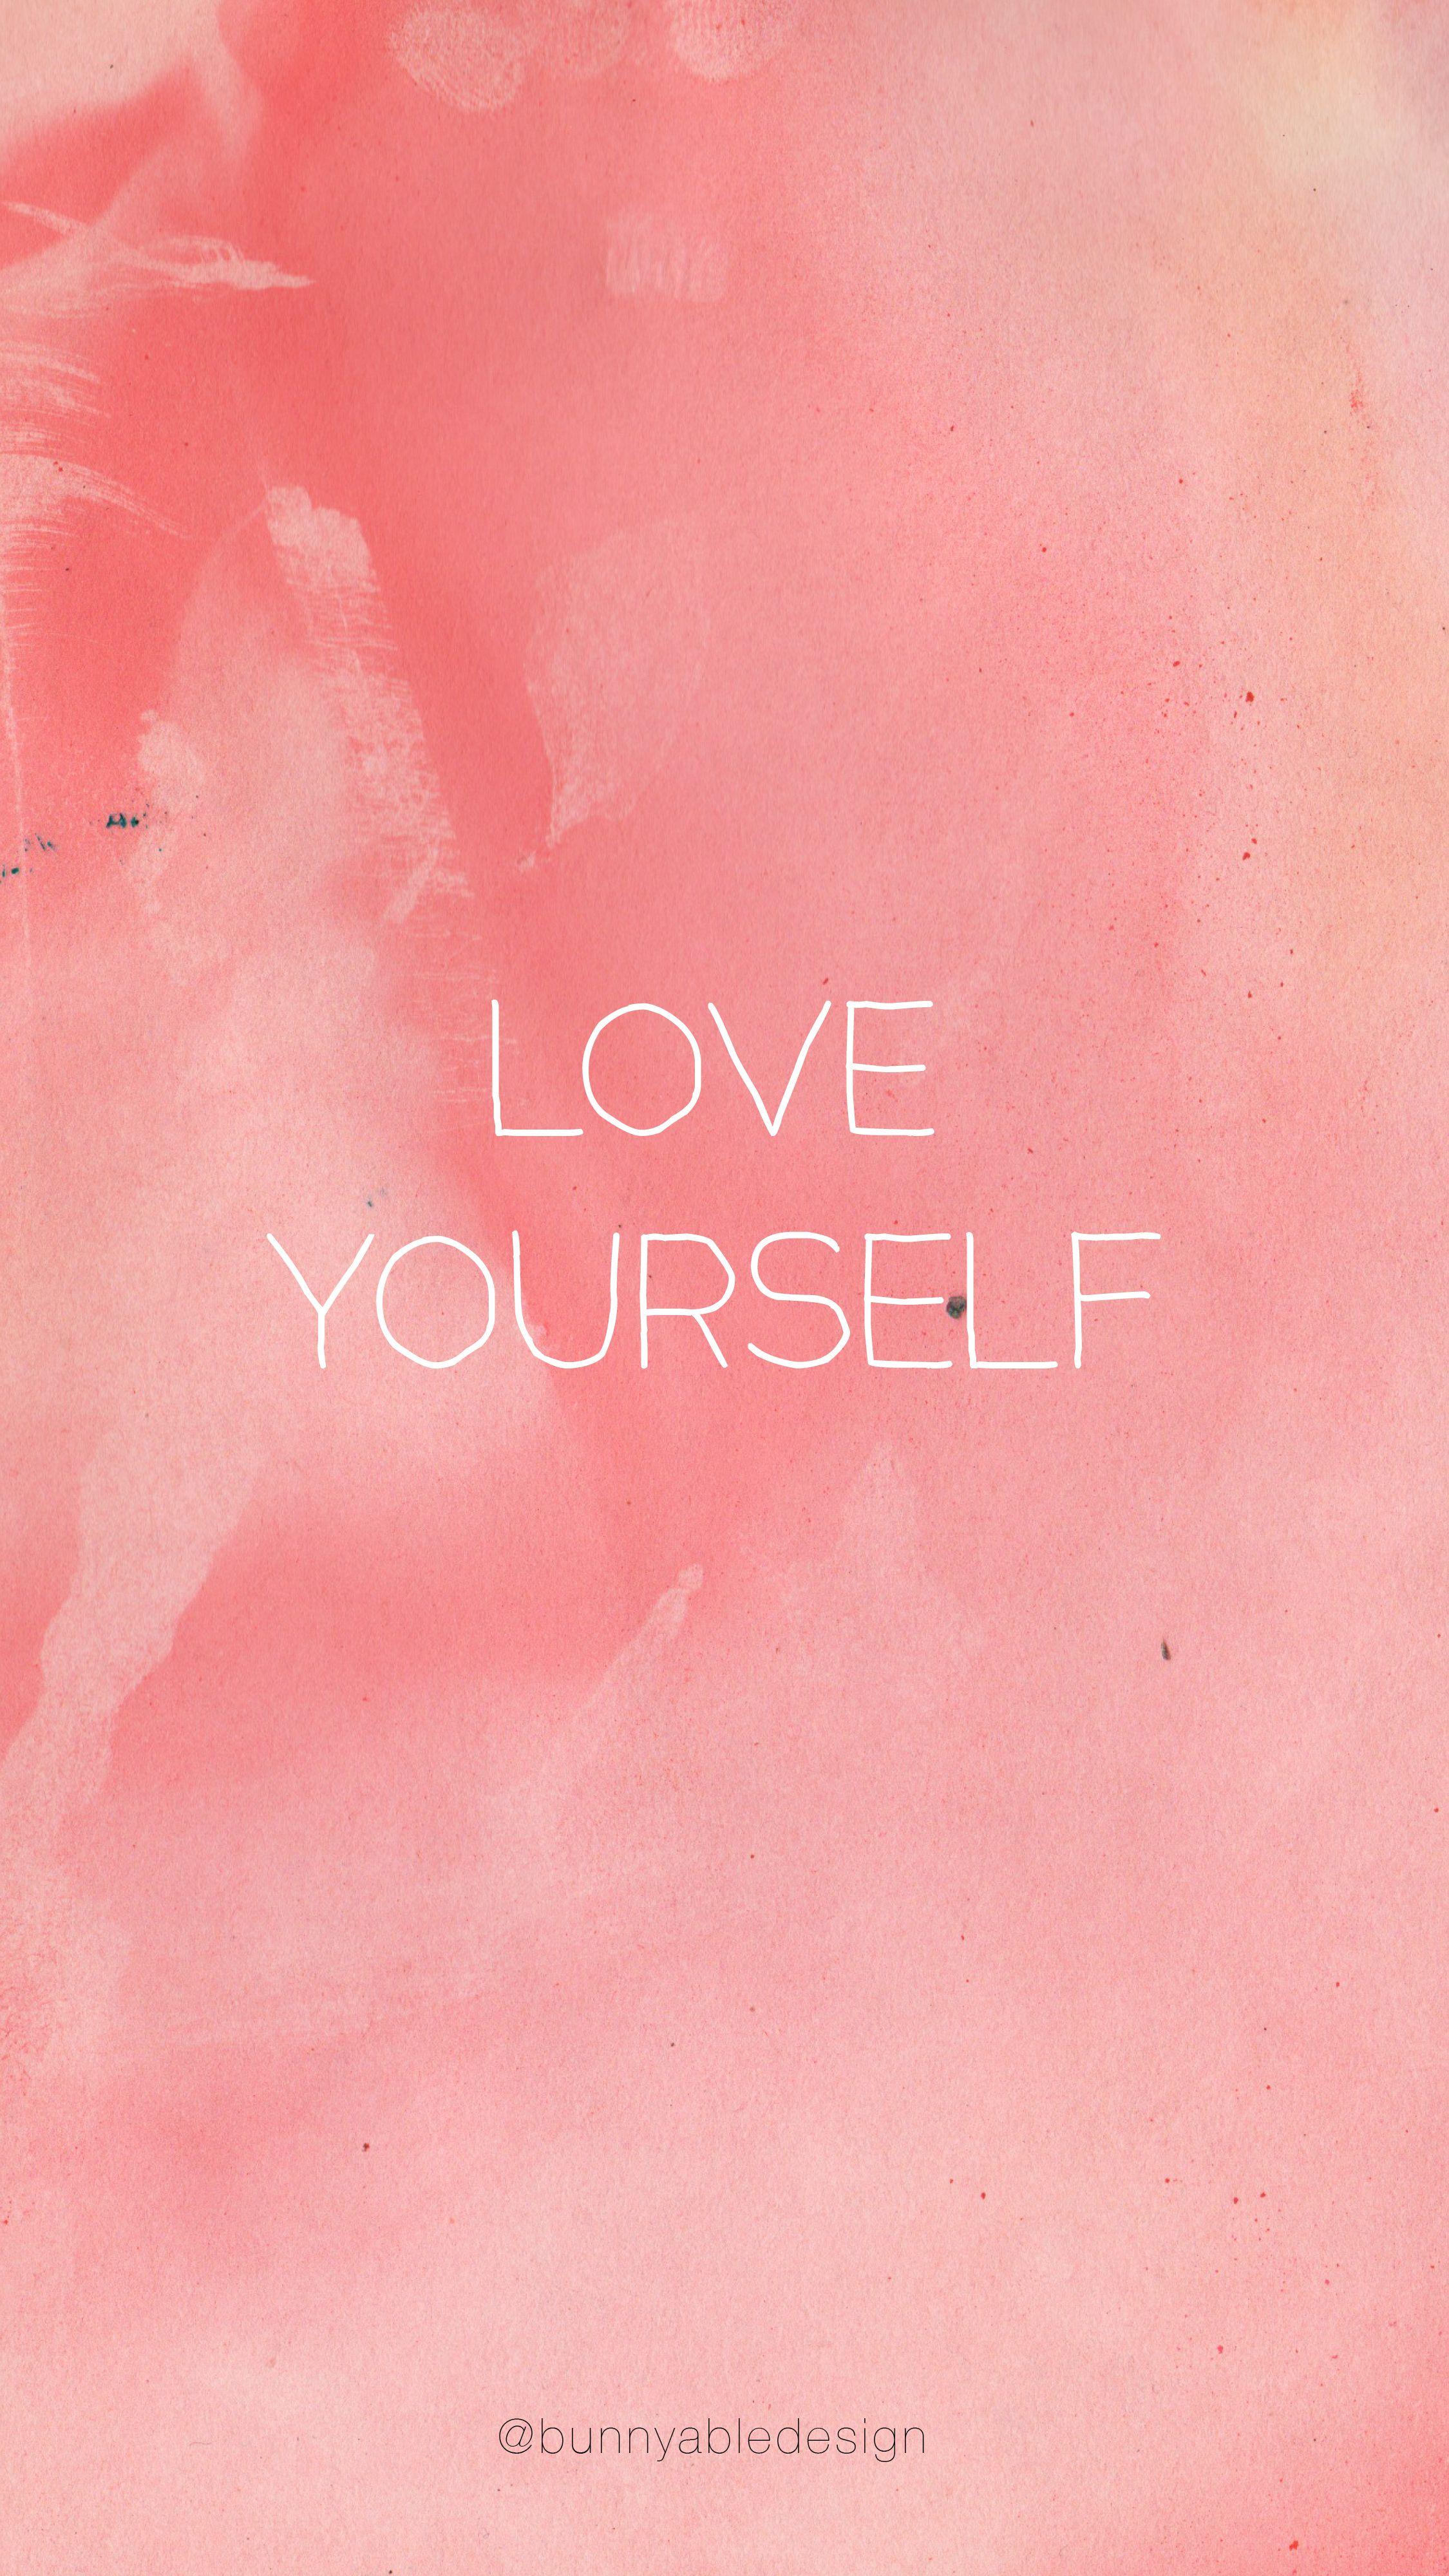 Love yourself ❤ #wallpaper #iphone. Wallpaper iphone love